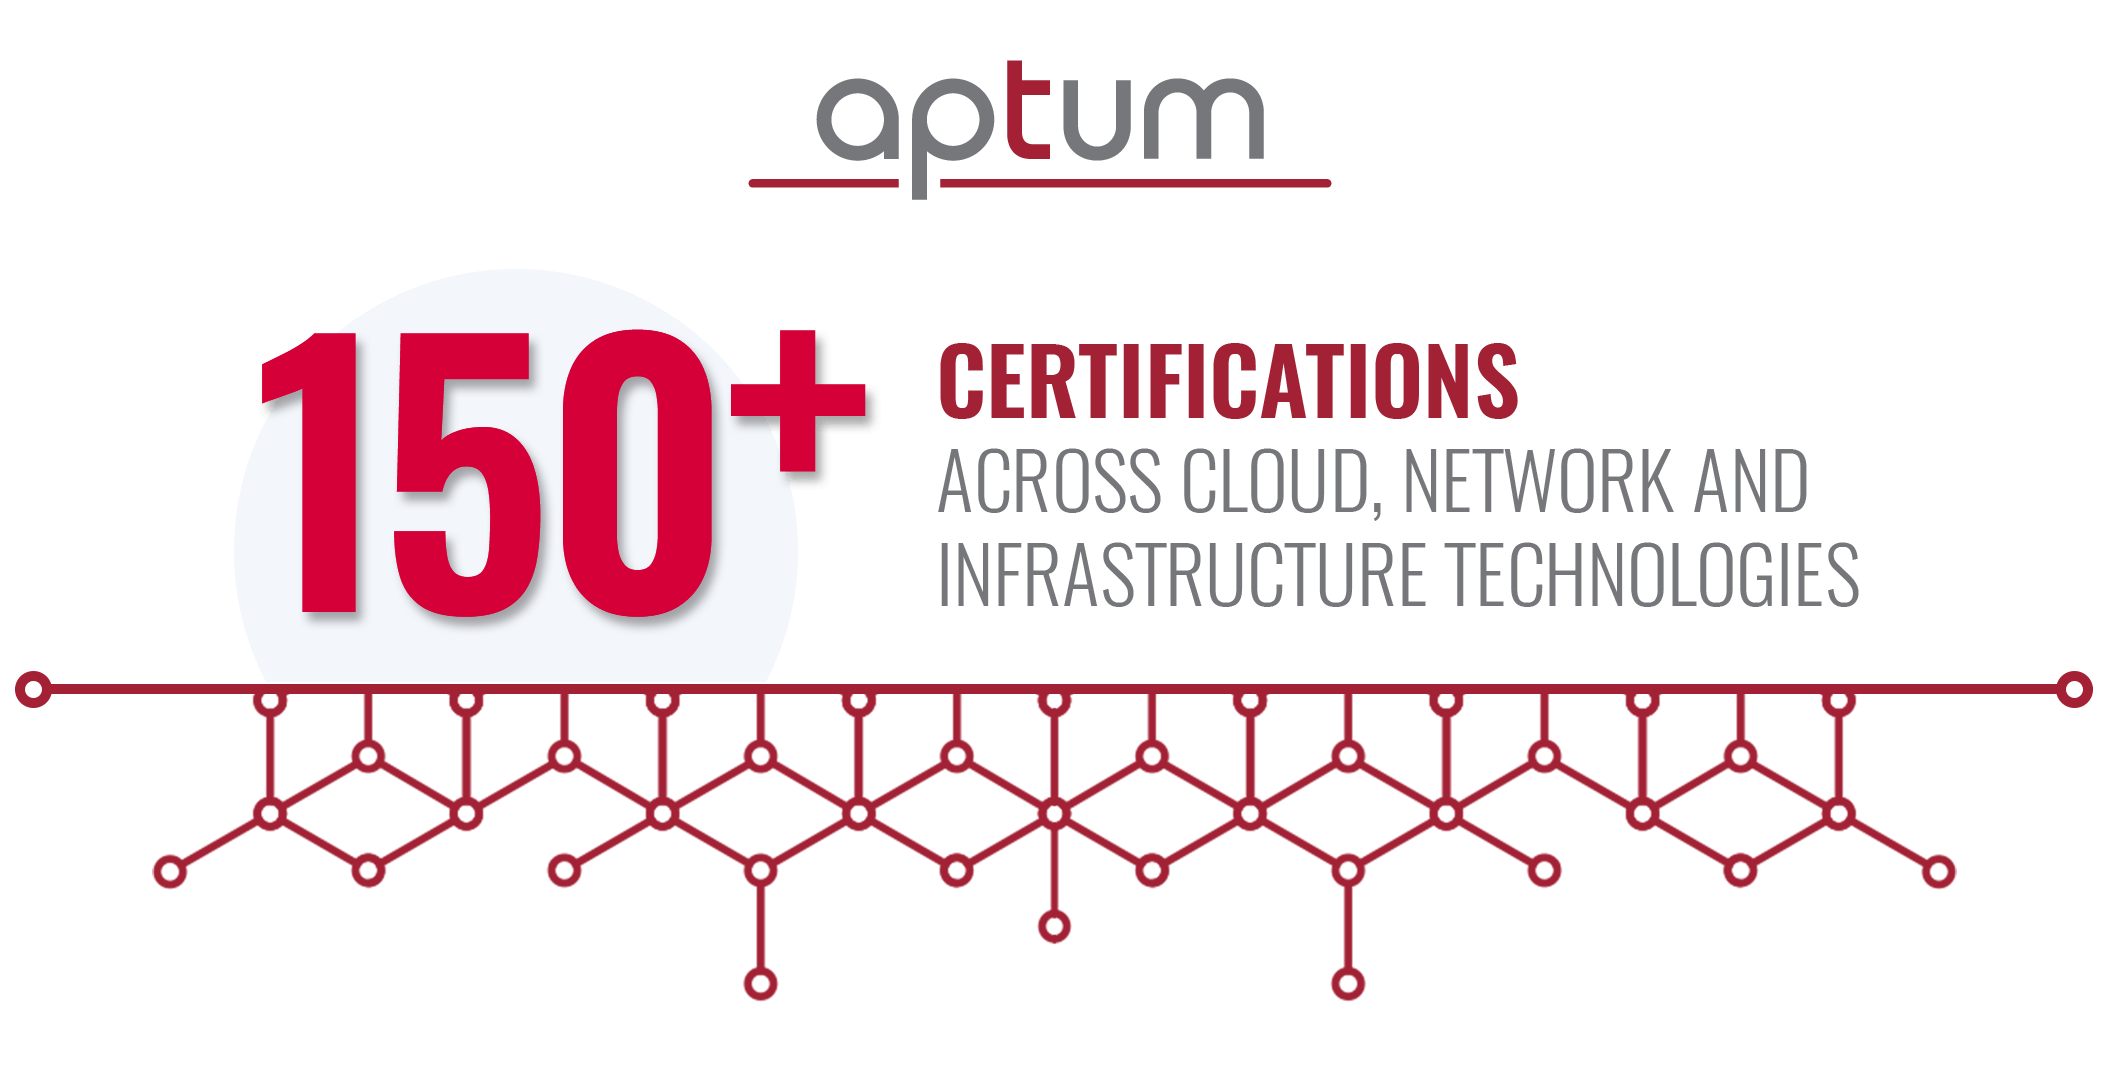 Aptum 150 Certifications